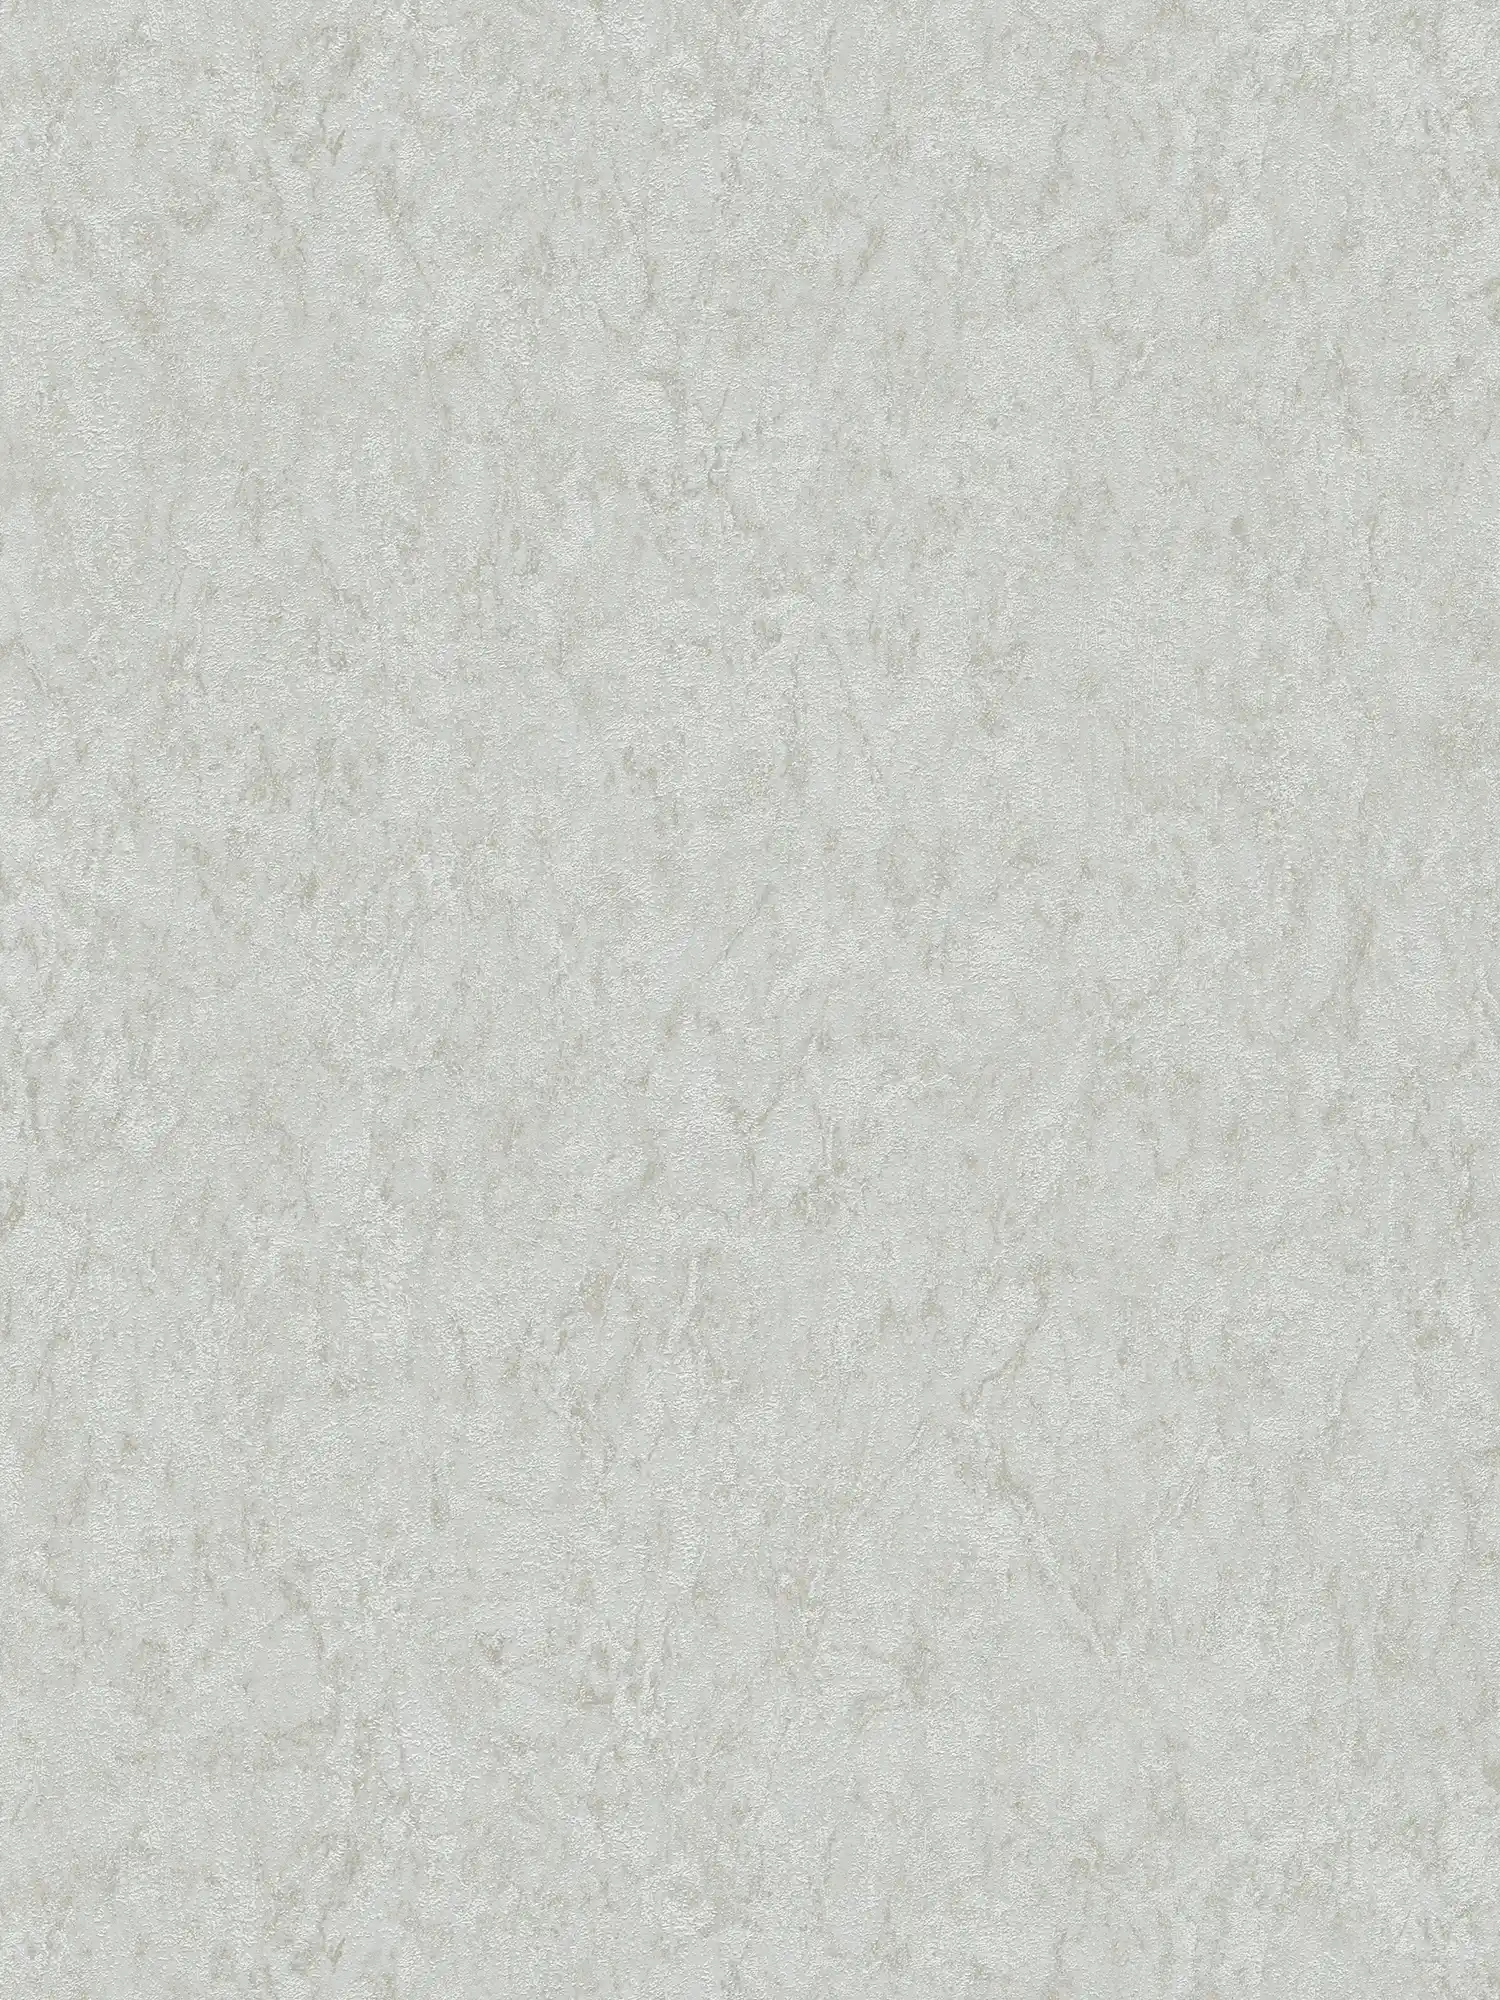 Plain wallpaper with texture effect & mottled design - grey, beige
